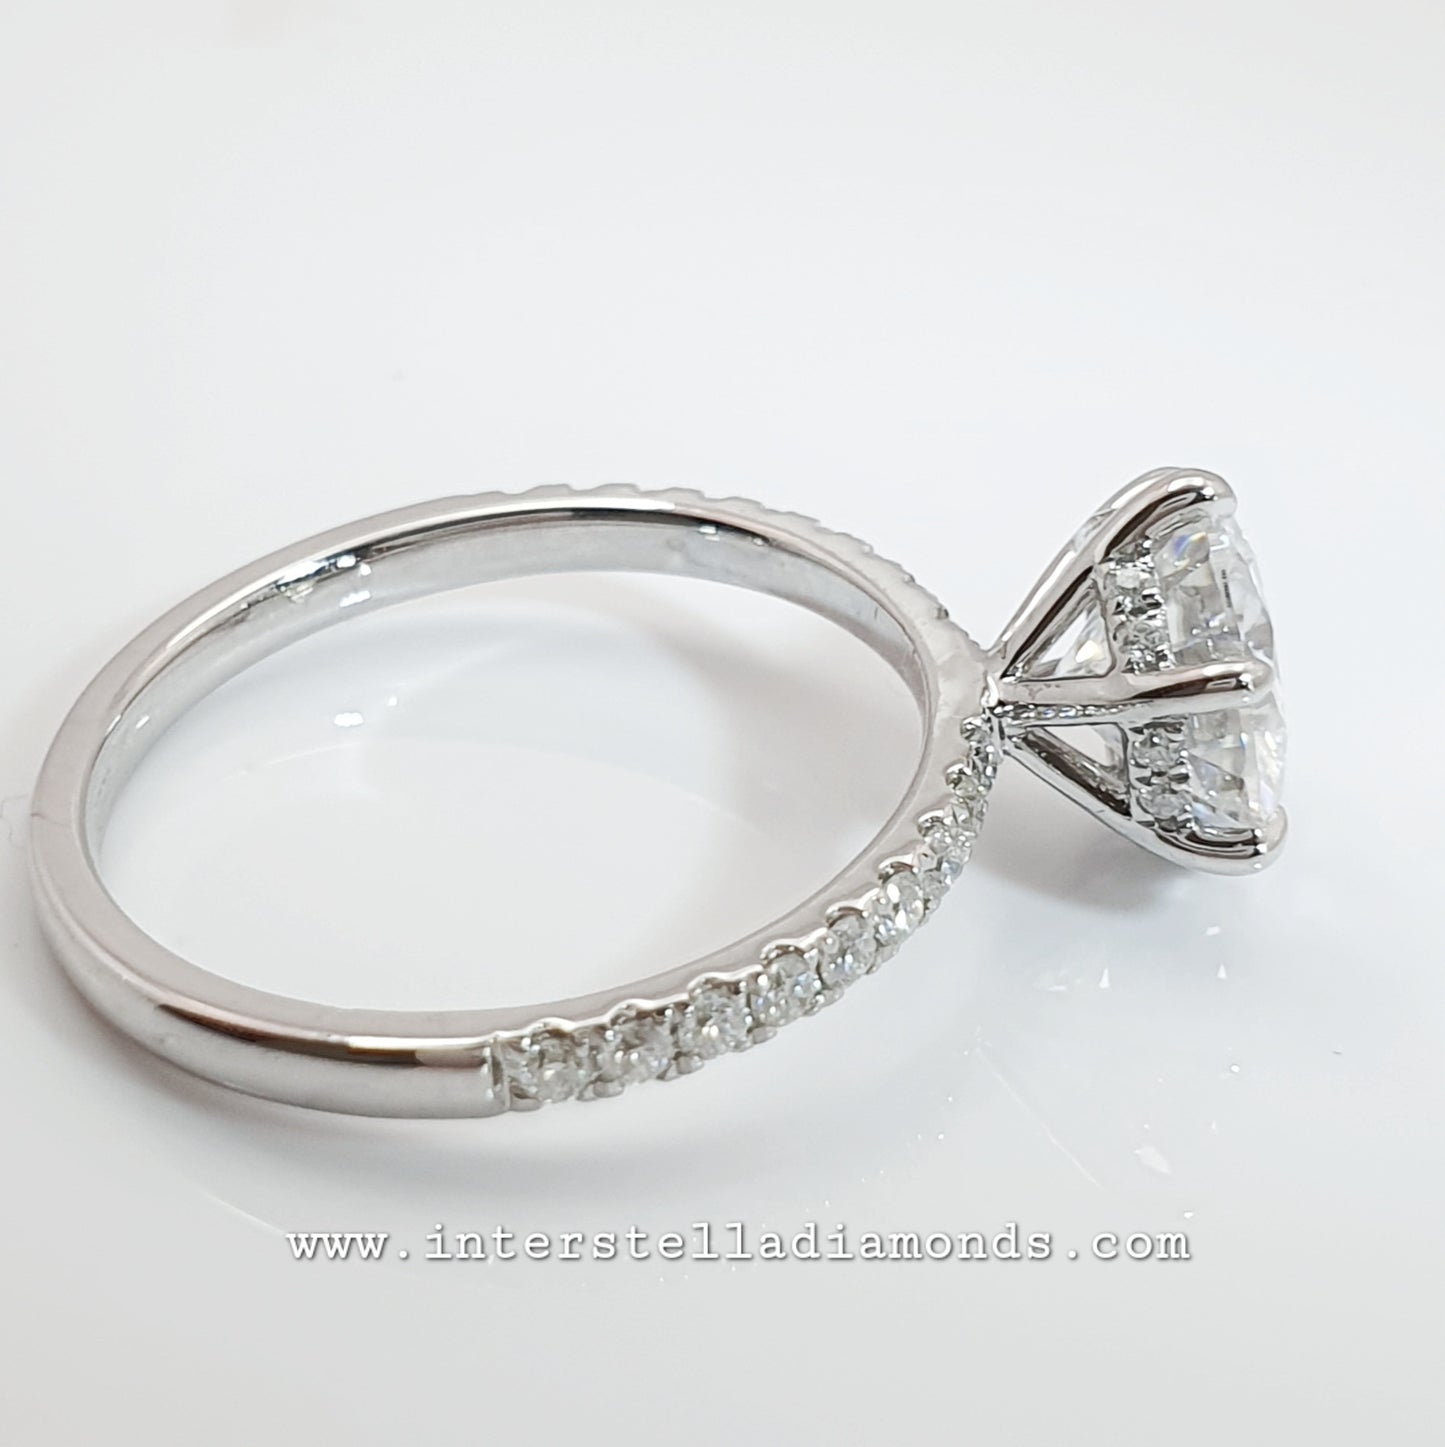 2.3ct Stunning Engagement Ring